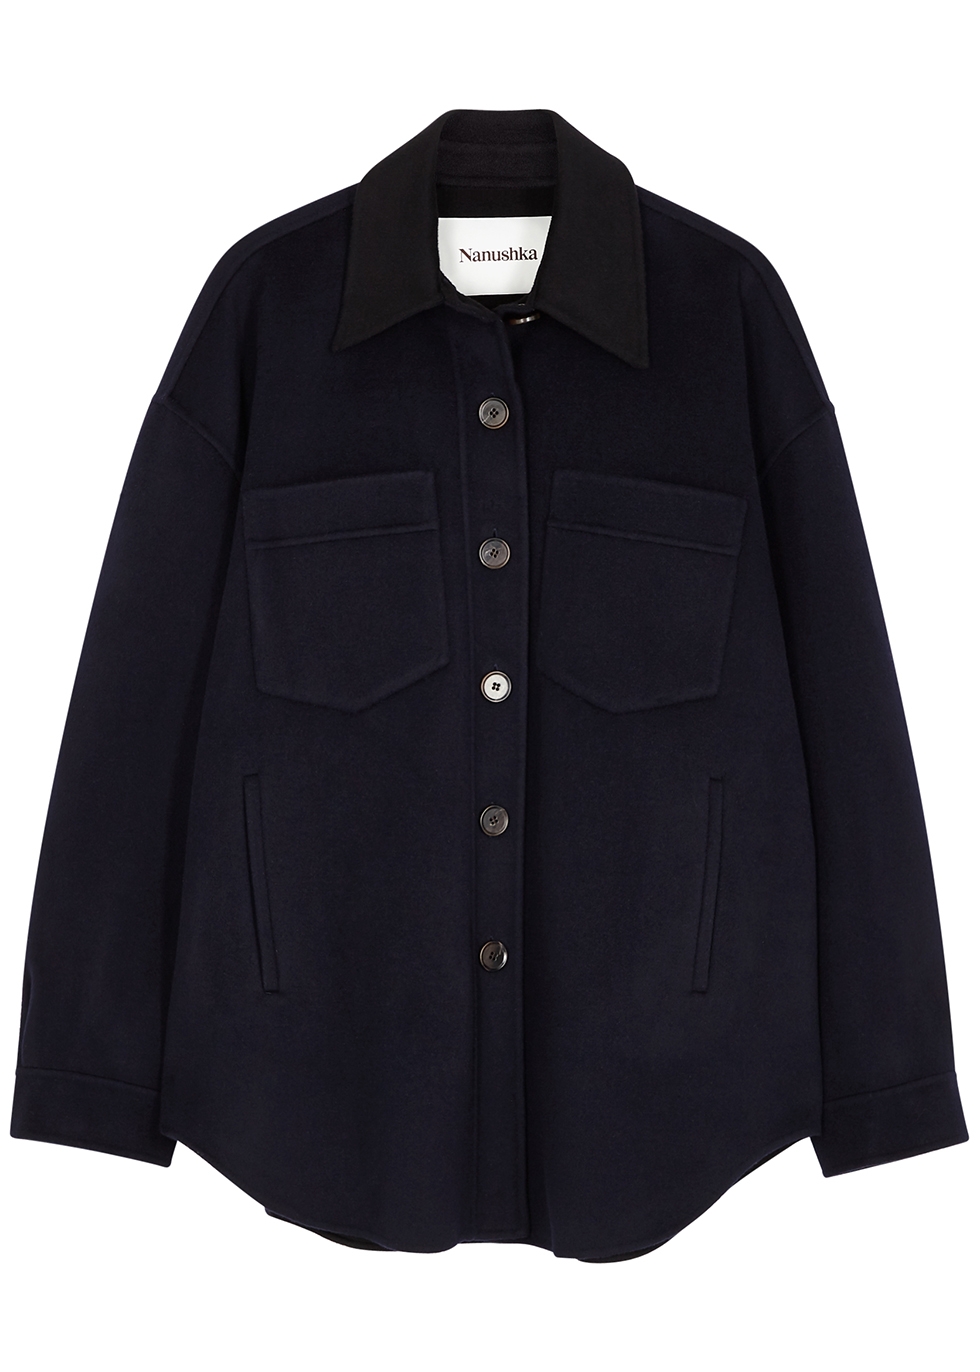 Martin navy wool-blend jacket